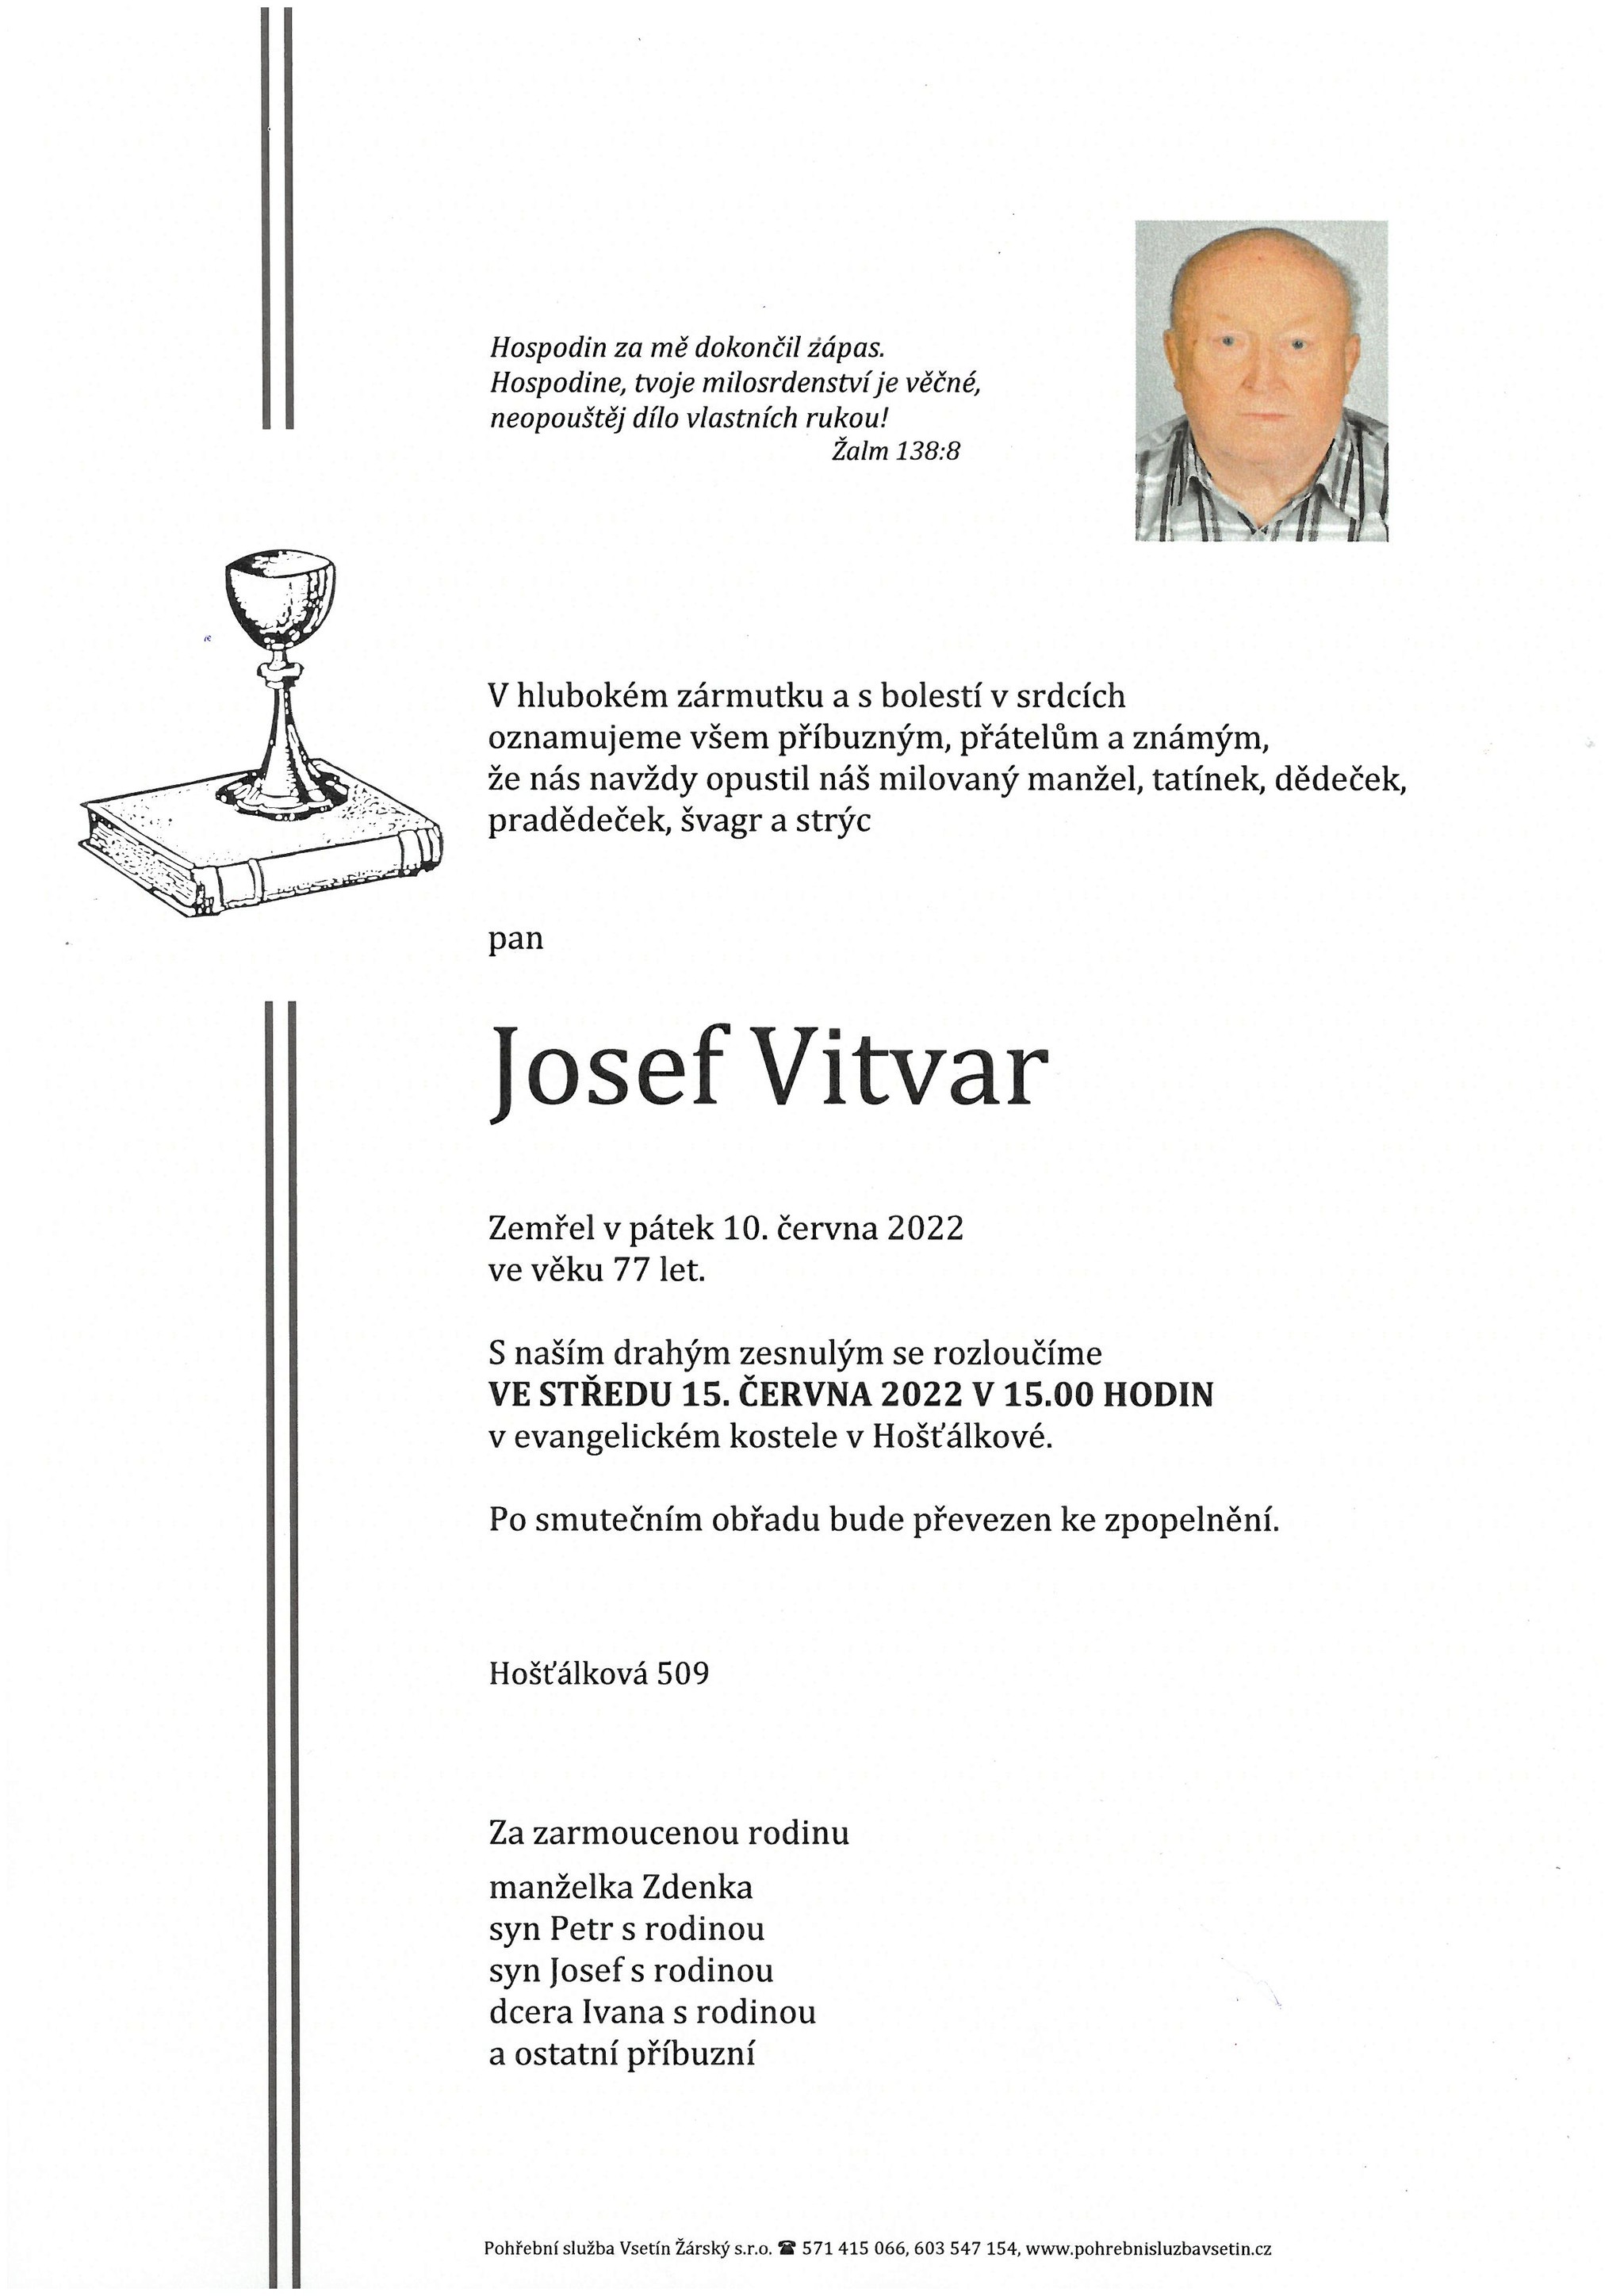 Josef Vitvar